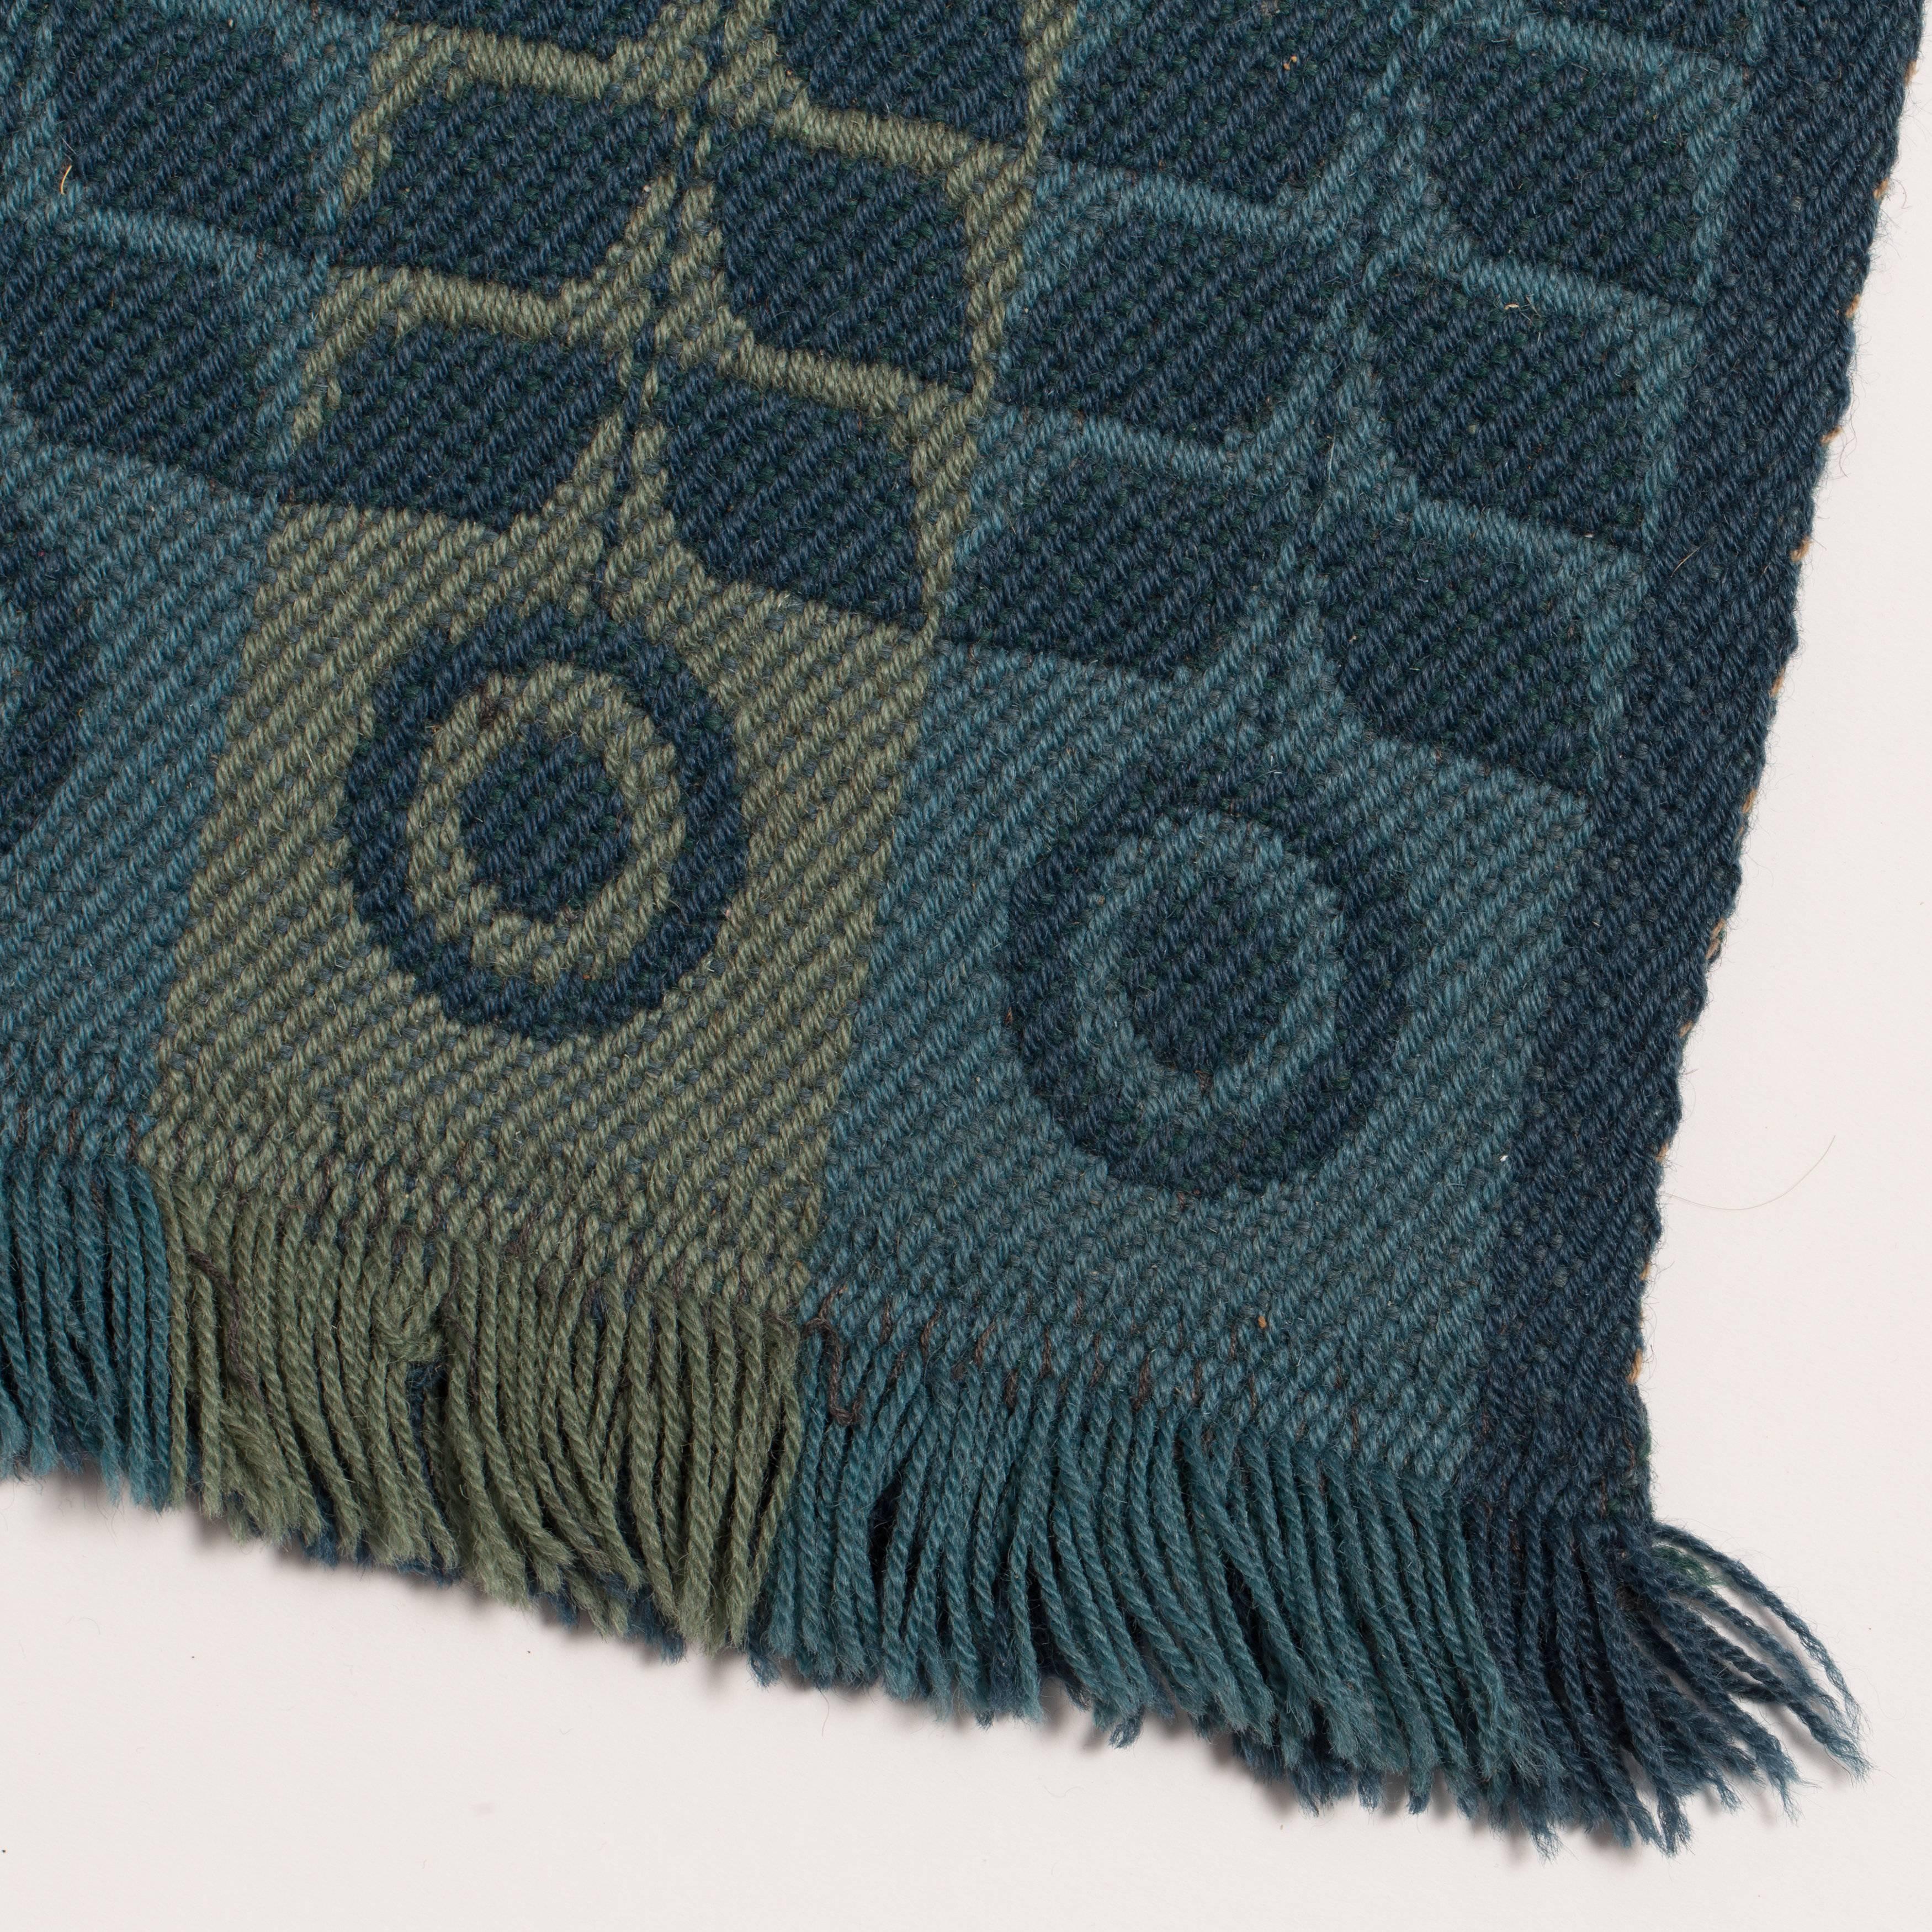 Flatweave Scandinavian rug with intricate pattern.